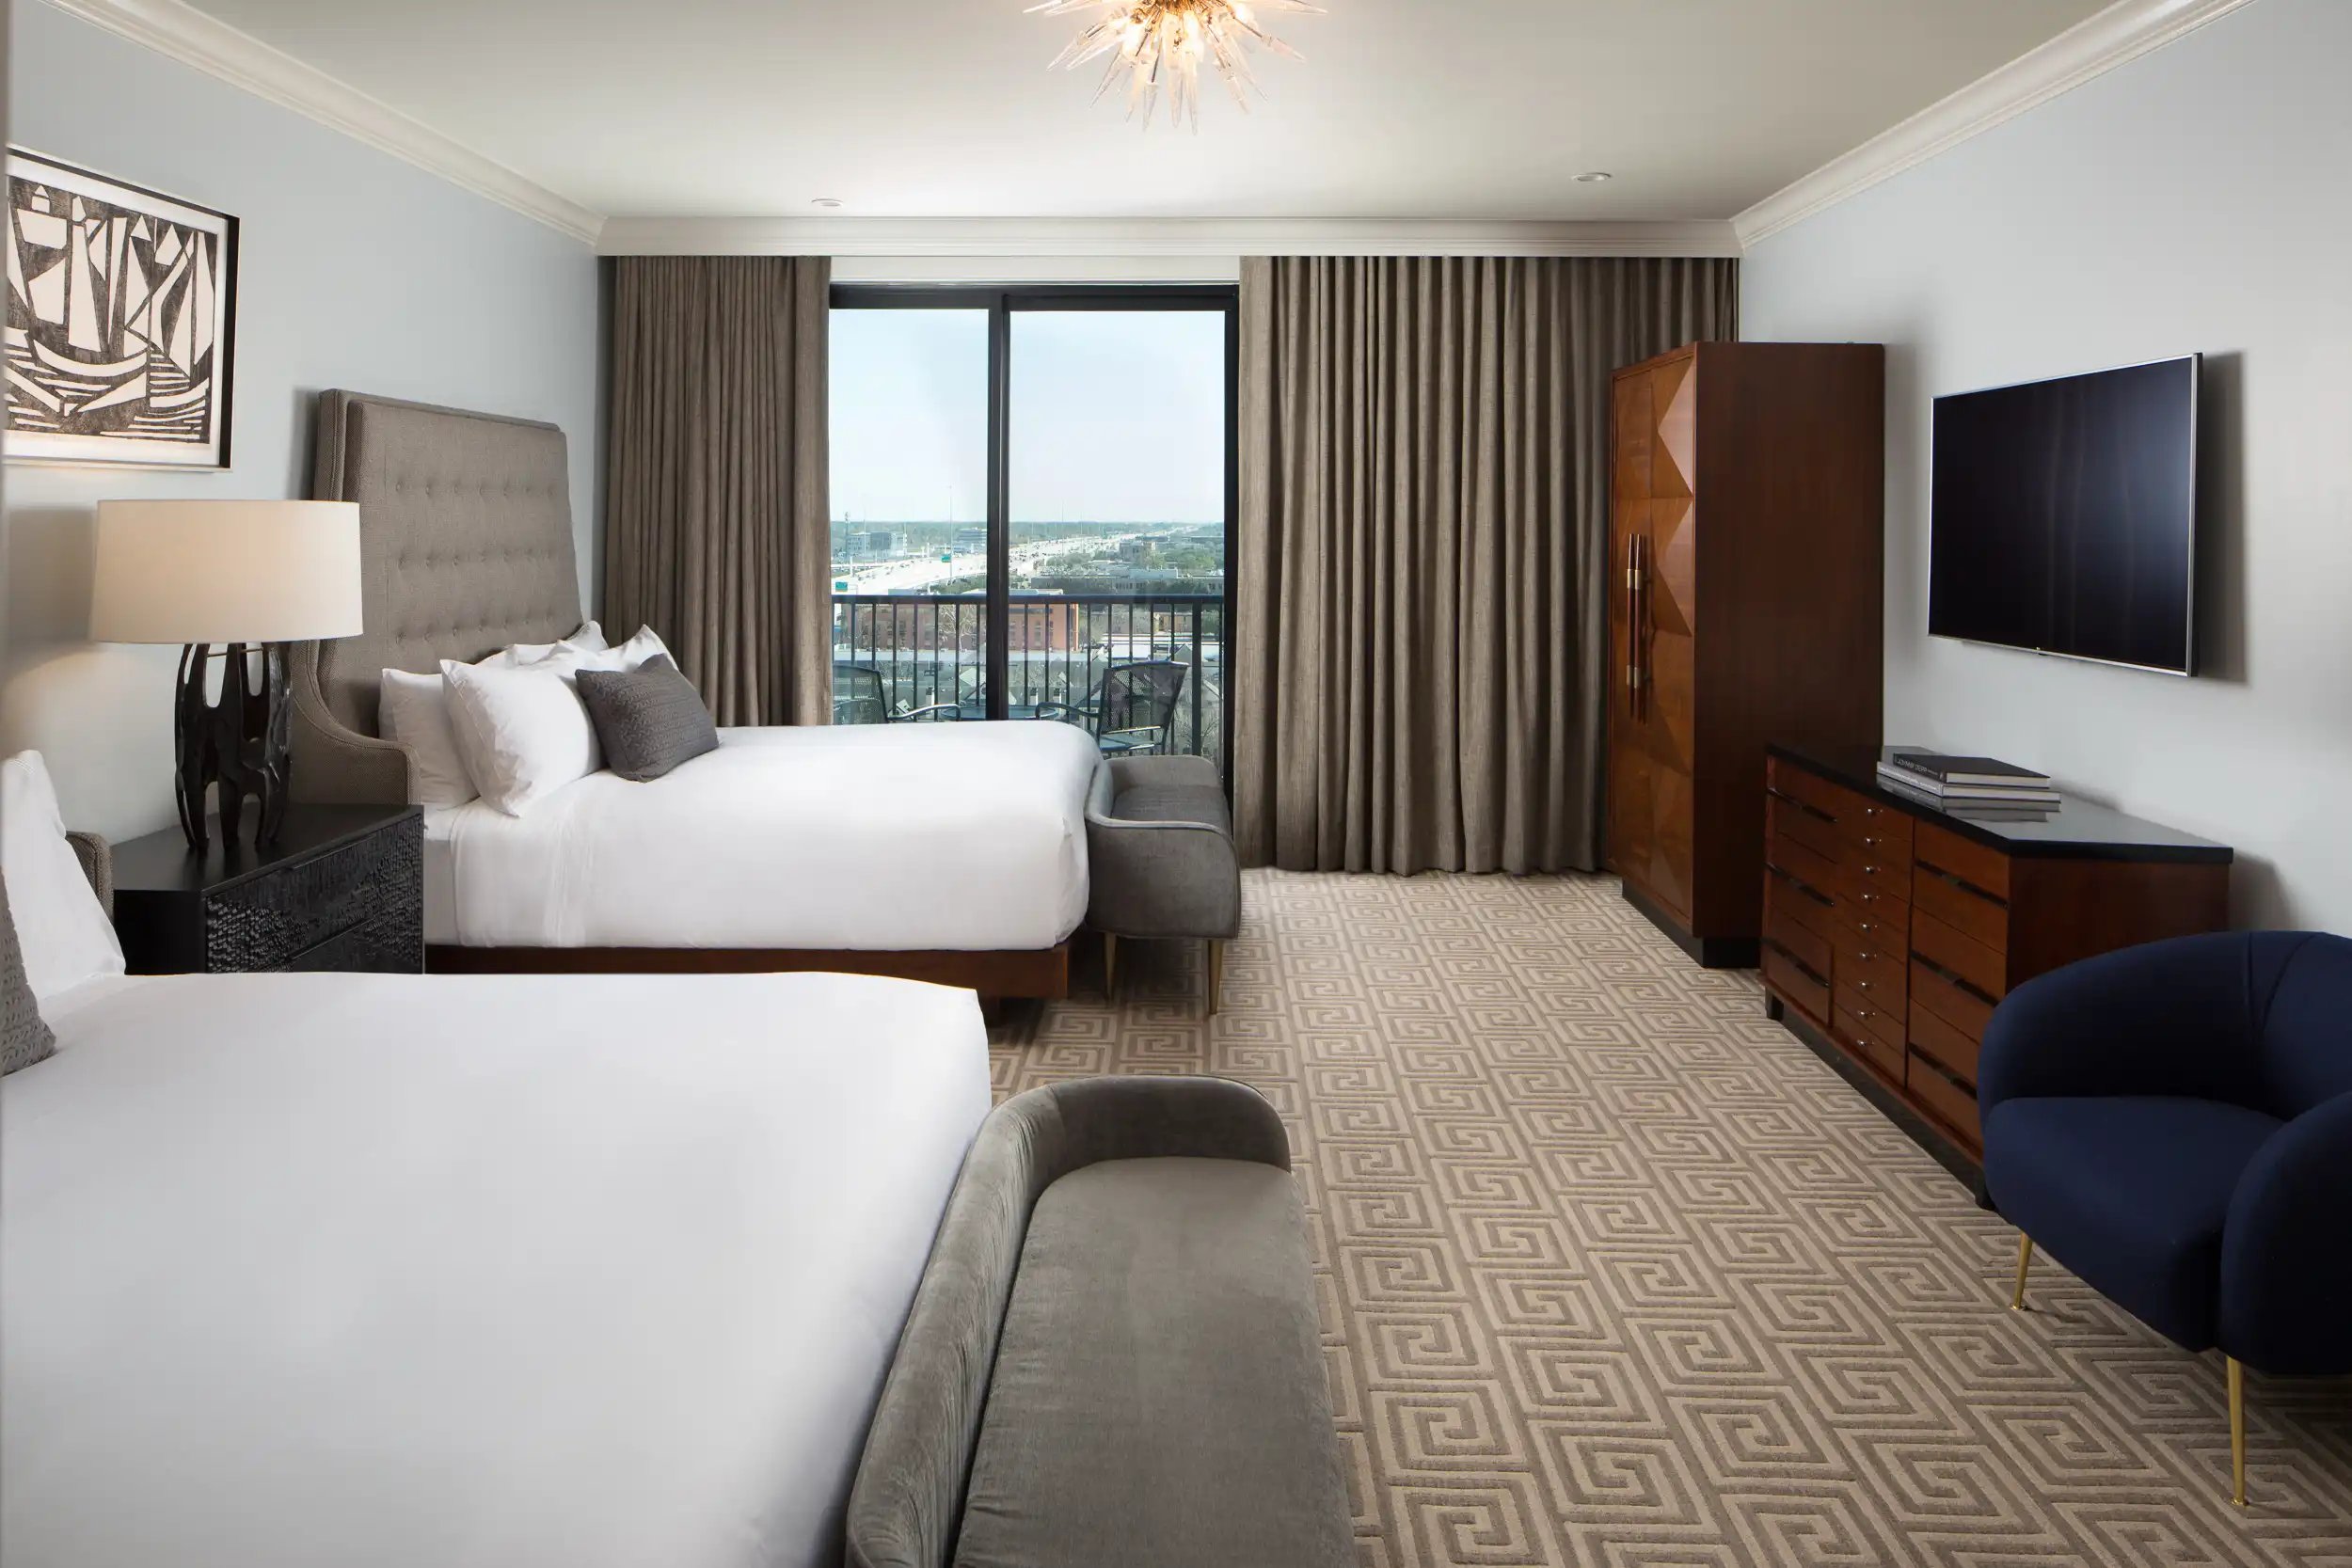 Hotel ZaZa Houston Memorial City Mag7 Suite Master Plan 2